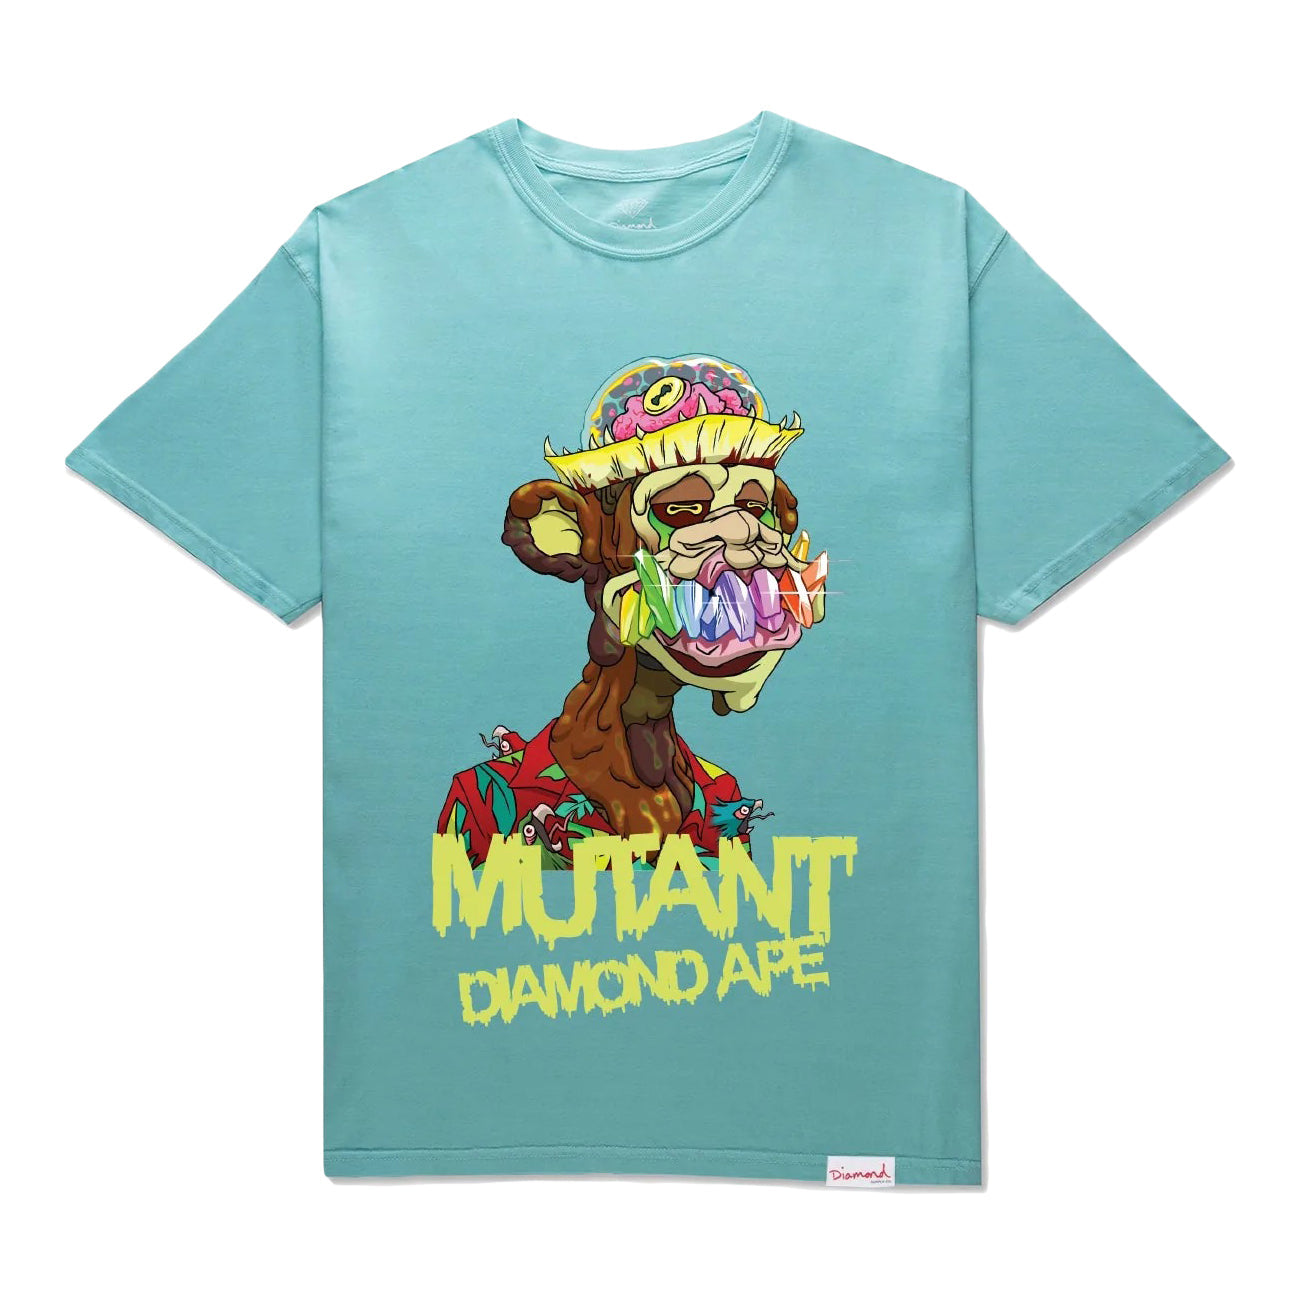 Diamond Supply Co Men Mutant Diamond Ape Tee Diamond Blue